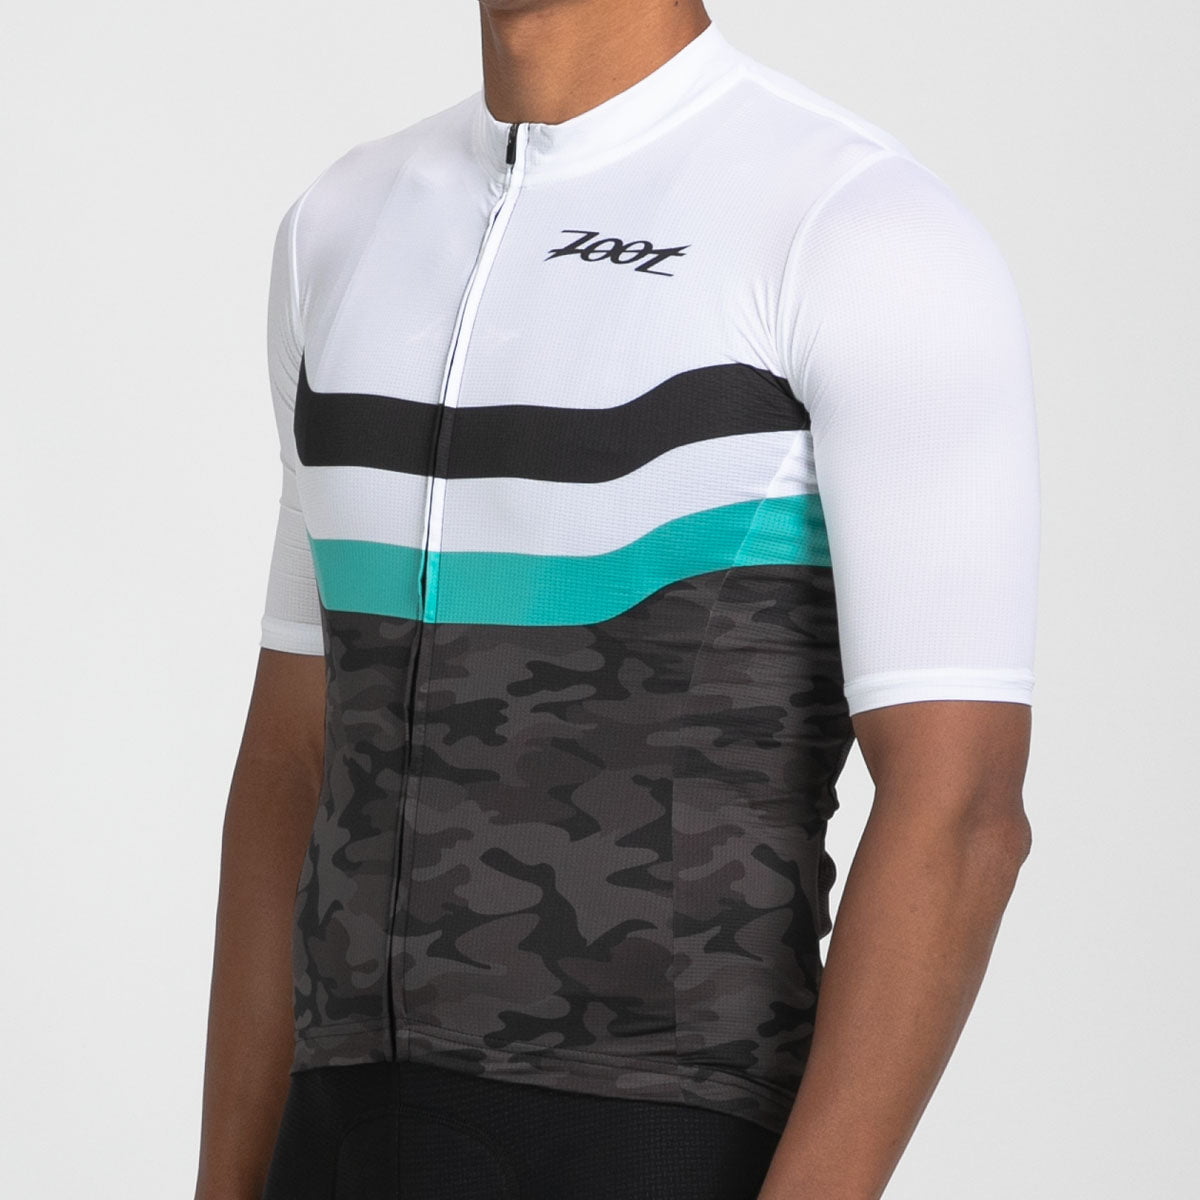 Zoot Sports CYCLE JERSEYS Men's Ltd Cycle Aero Jersey - Camouflage